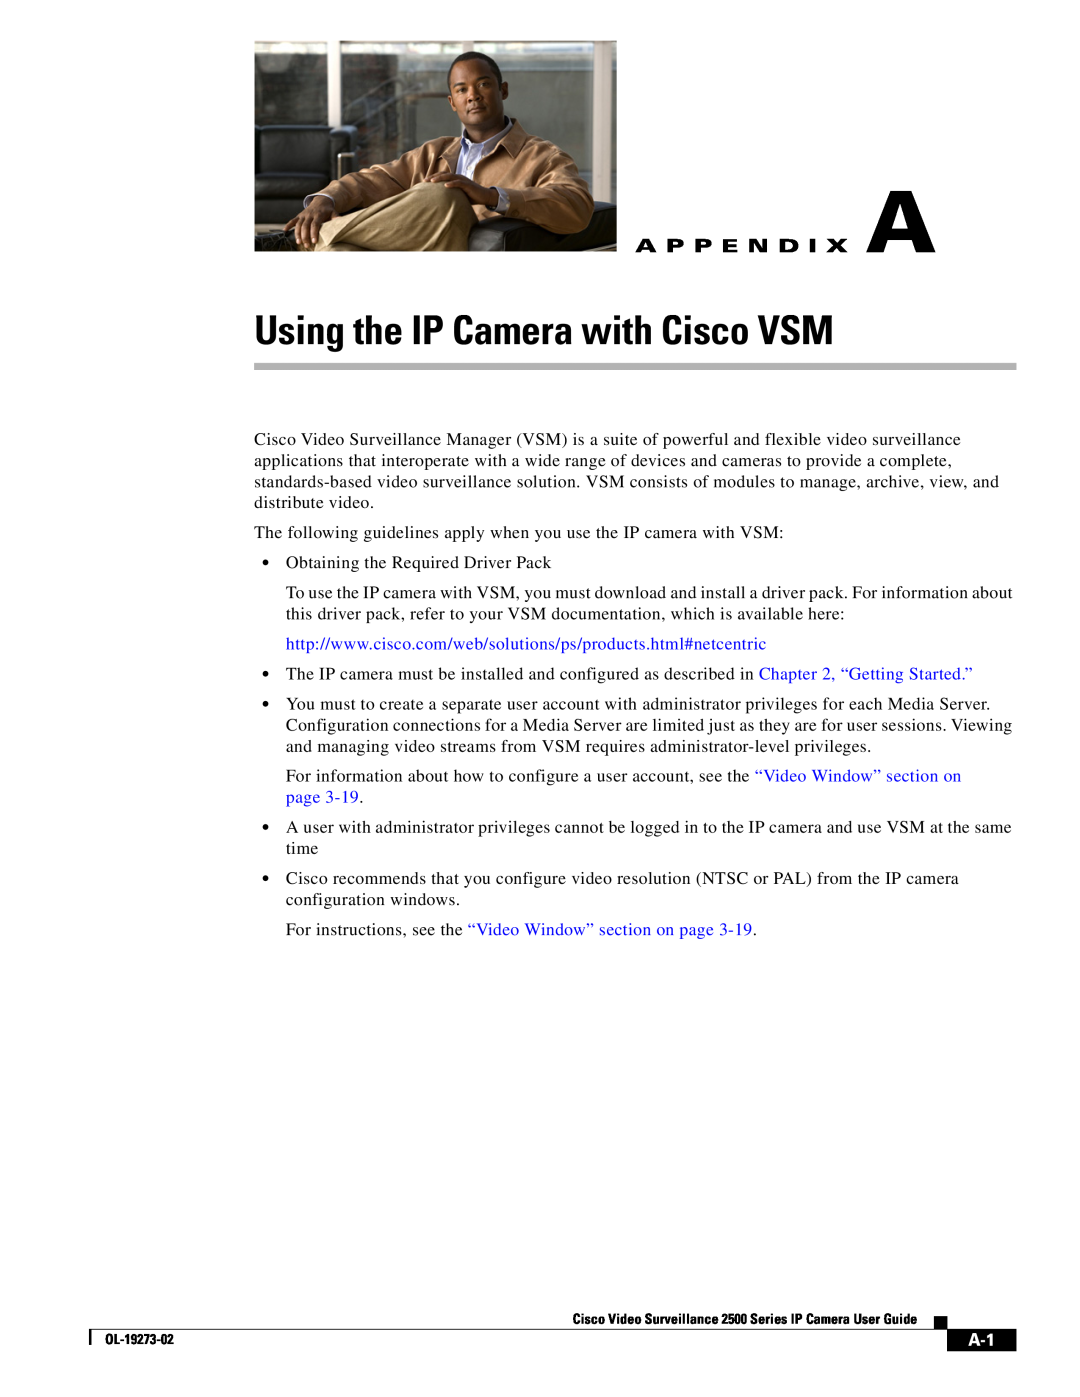 Cisco Systems CIVS-IPC-2500, 2500 Series manual Using the IP Camera with Cisco VSM, A P P E N D I X A 